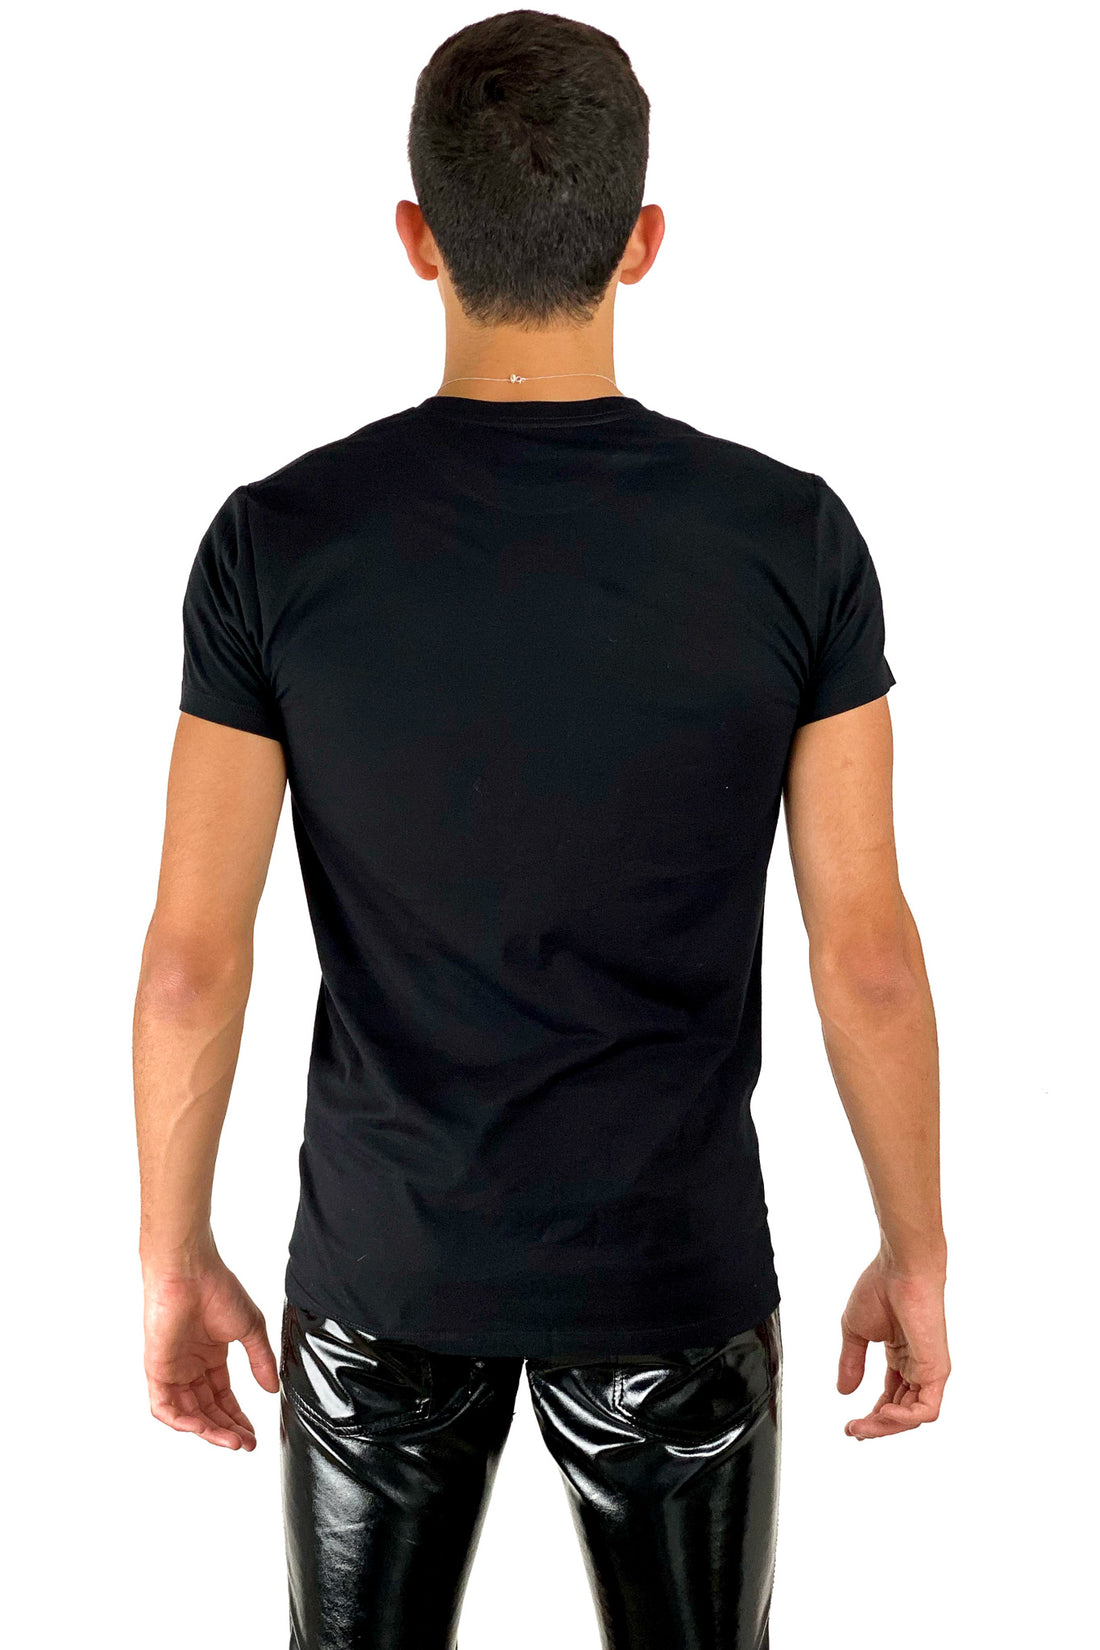 Angelito T-Shirt - KAV Wear 